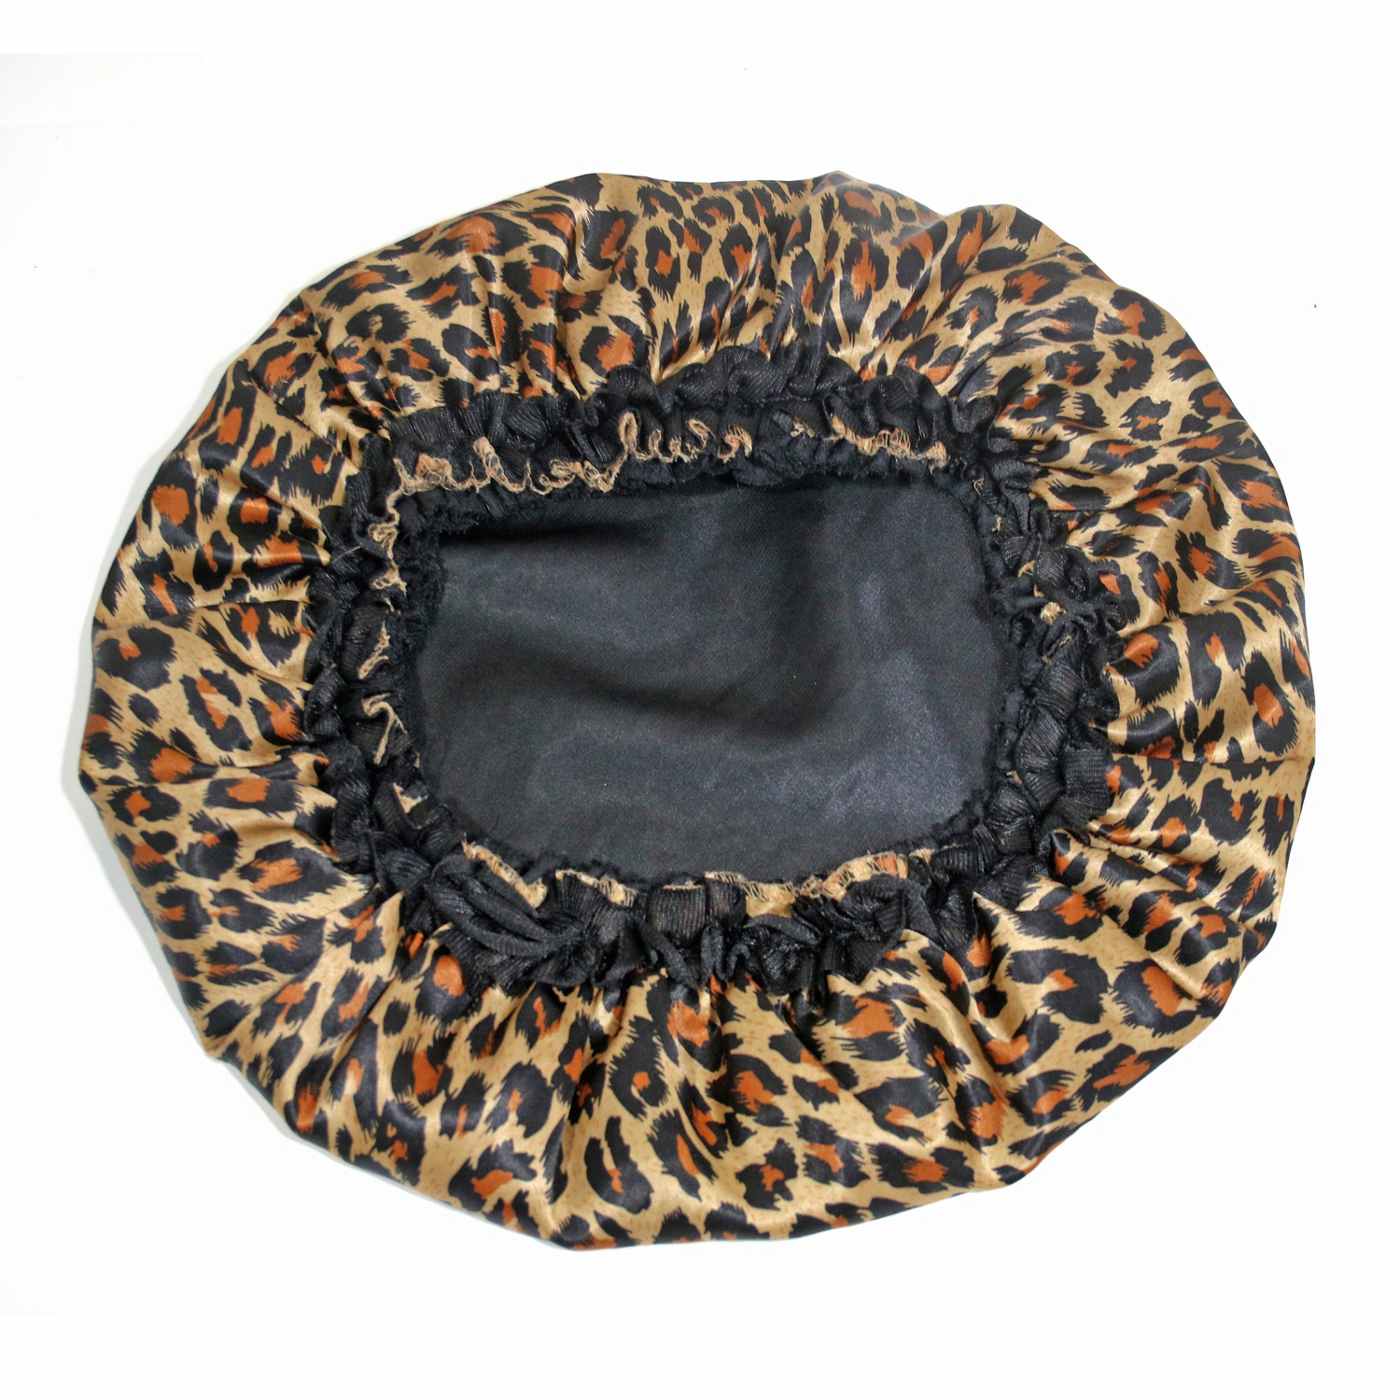 Evolve Black Satin Bonnet - Cheetah Print; image 6 of 6